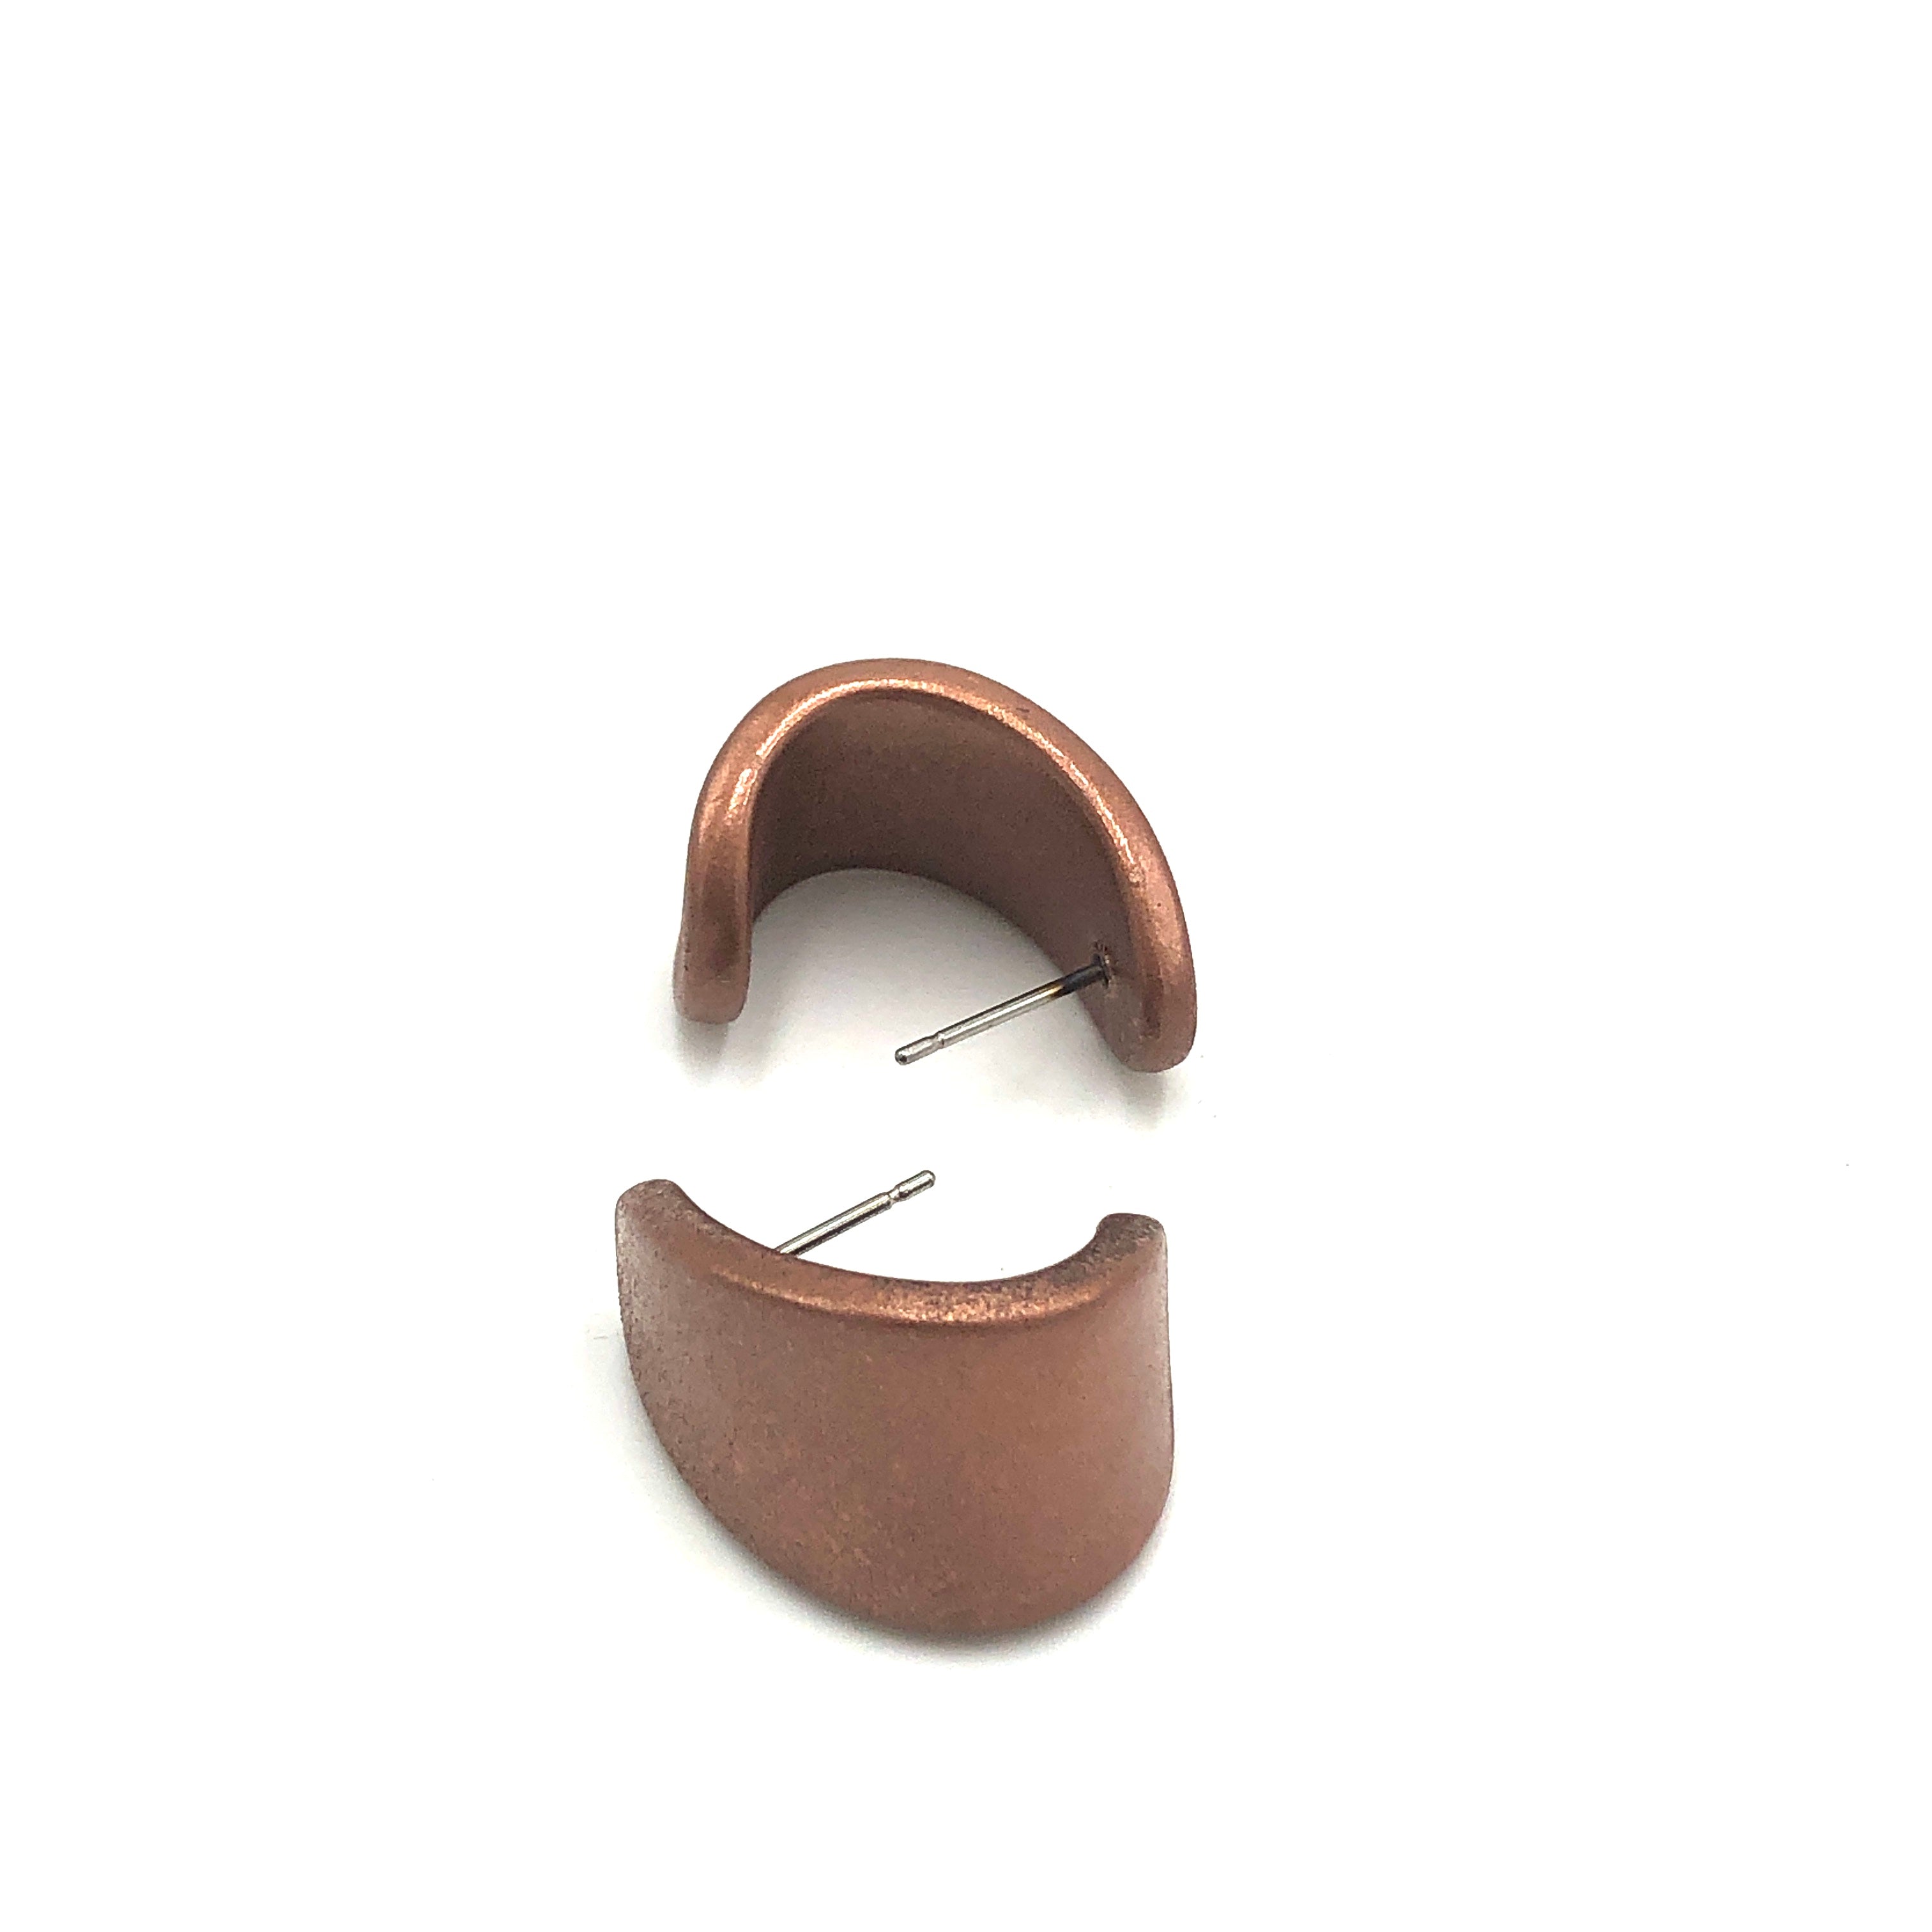 Shabby Metallic Copper Curled Petal Stud Earrings